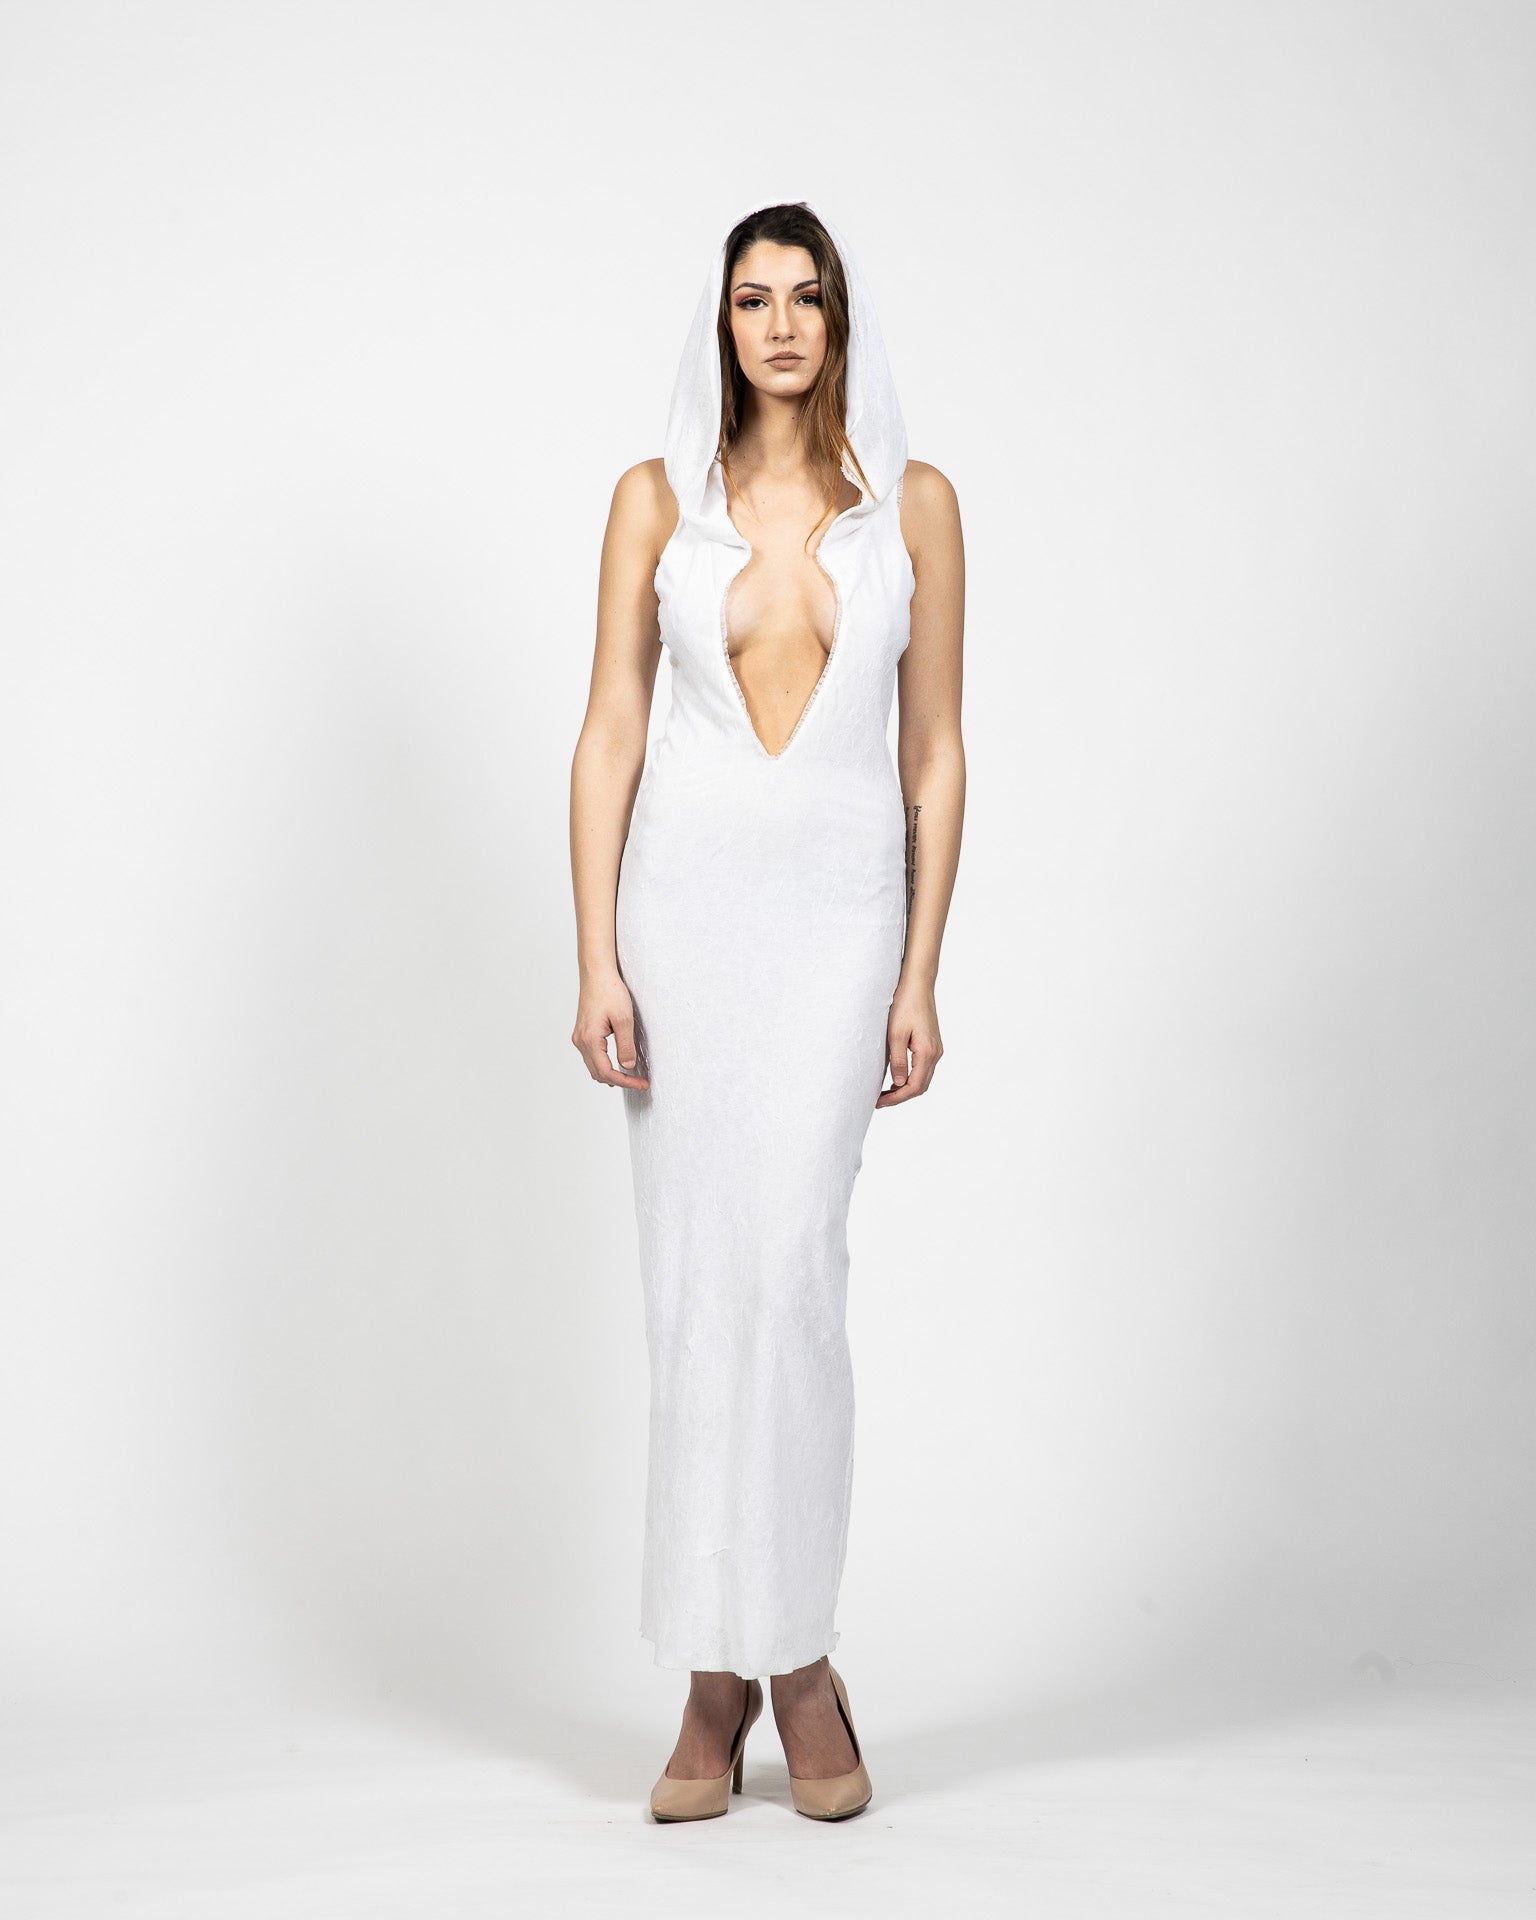 Long White Sleeveless Dress With Hood - Front View - Samuel Vartan